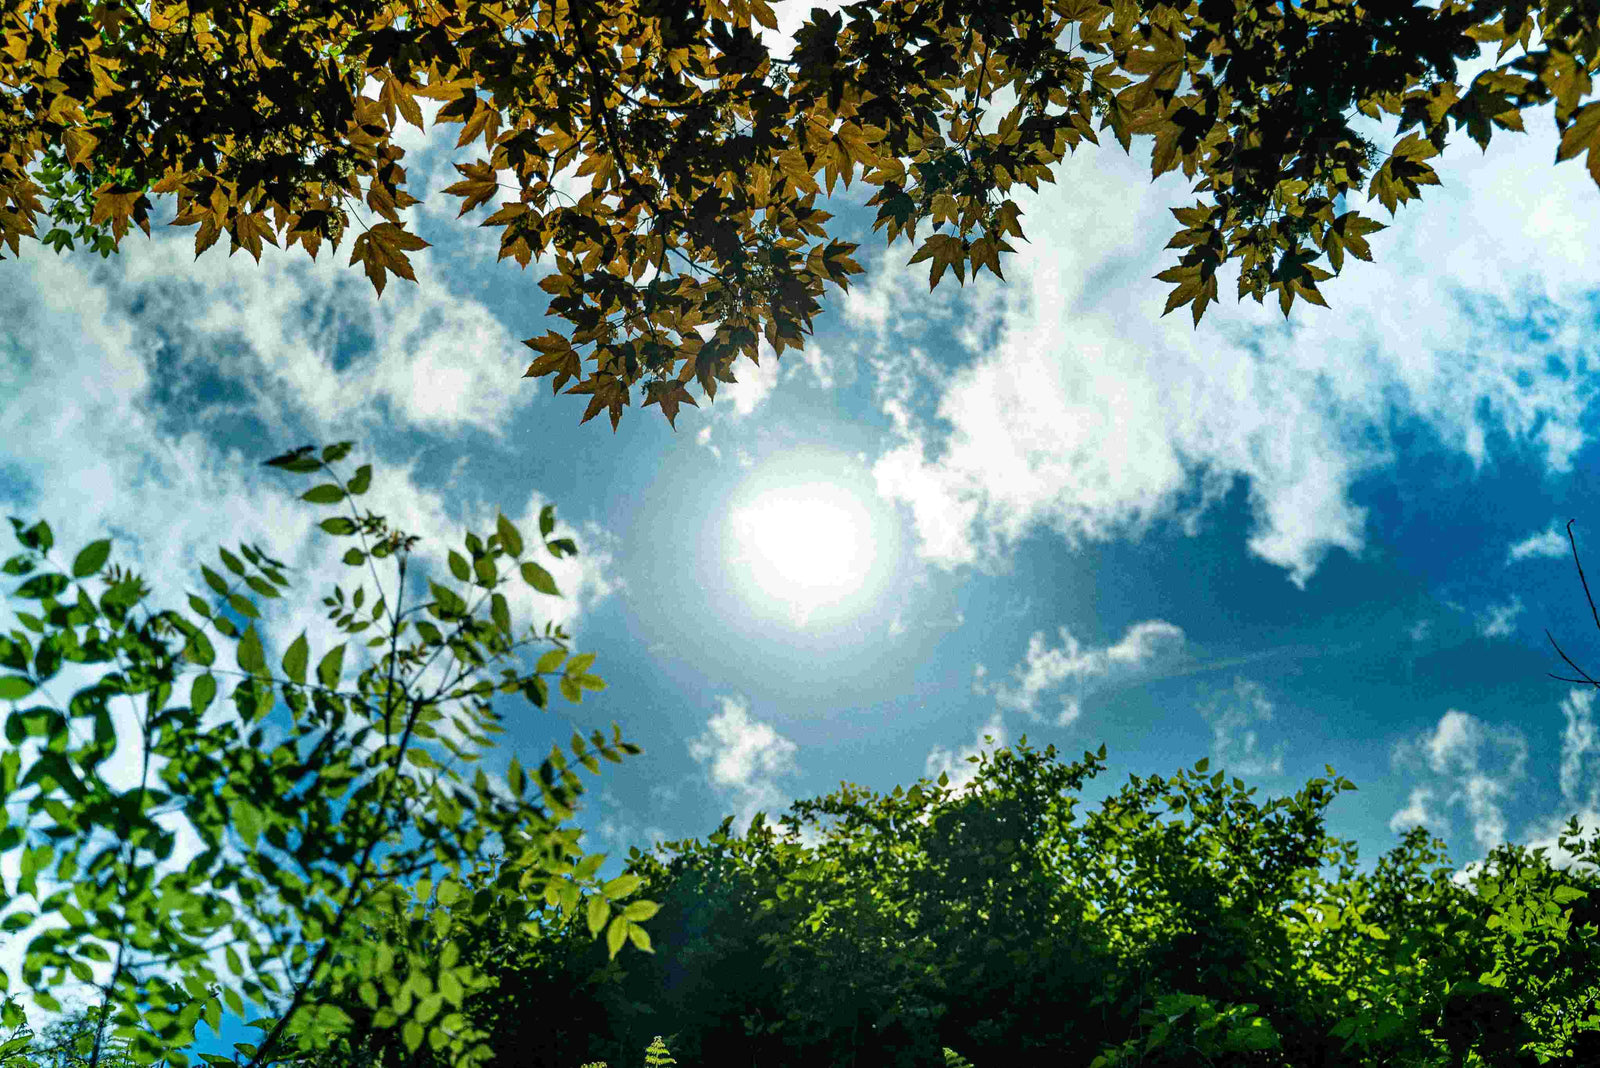 Gardening and Sunlight: How Light Can Affect Your Garden